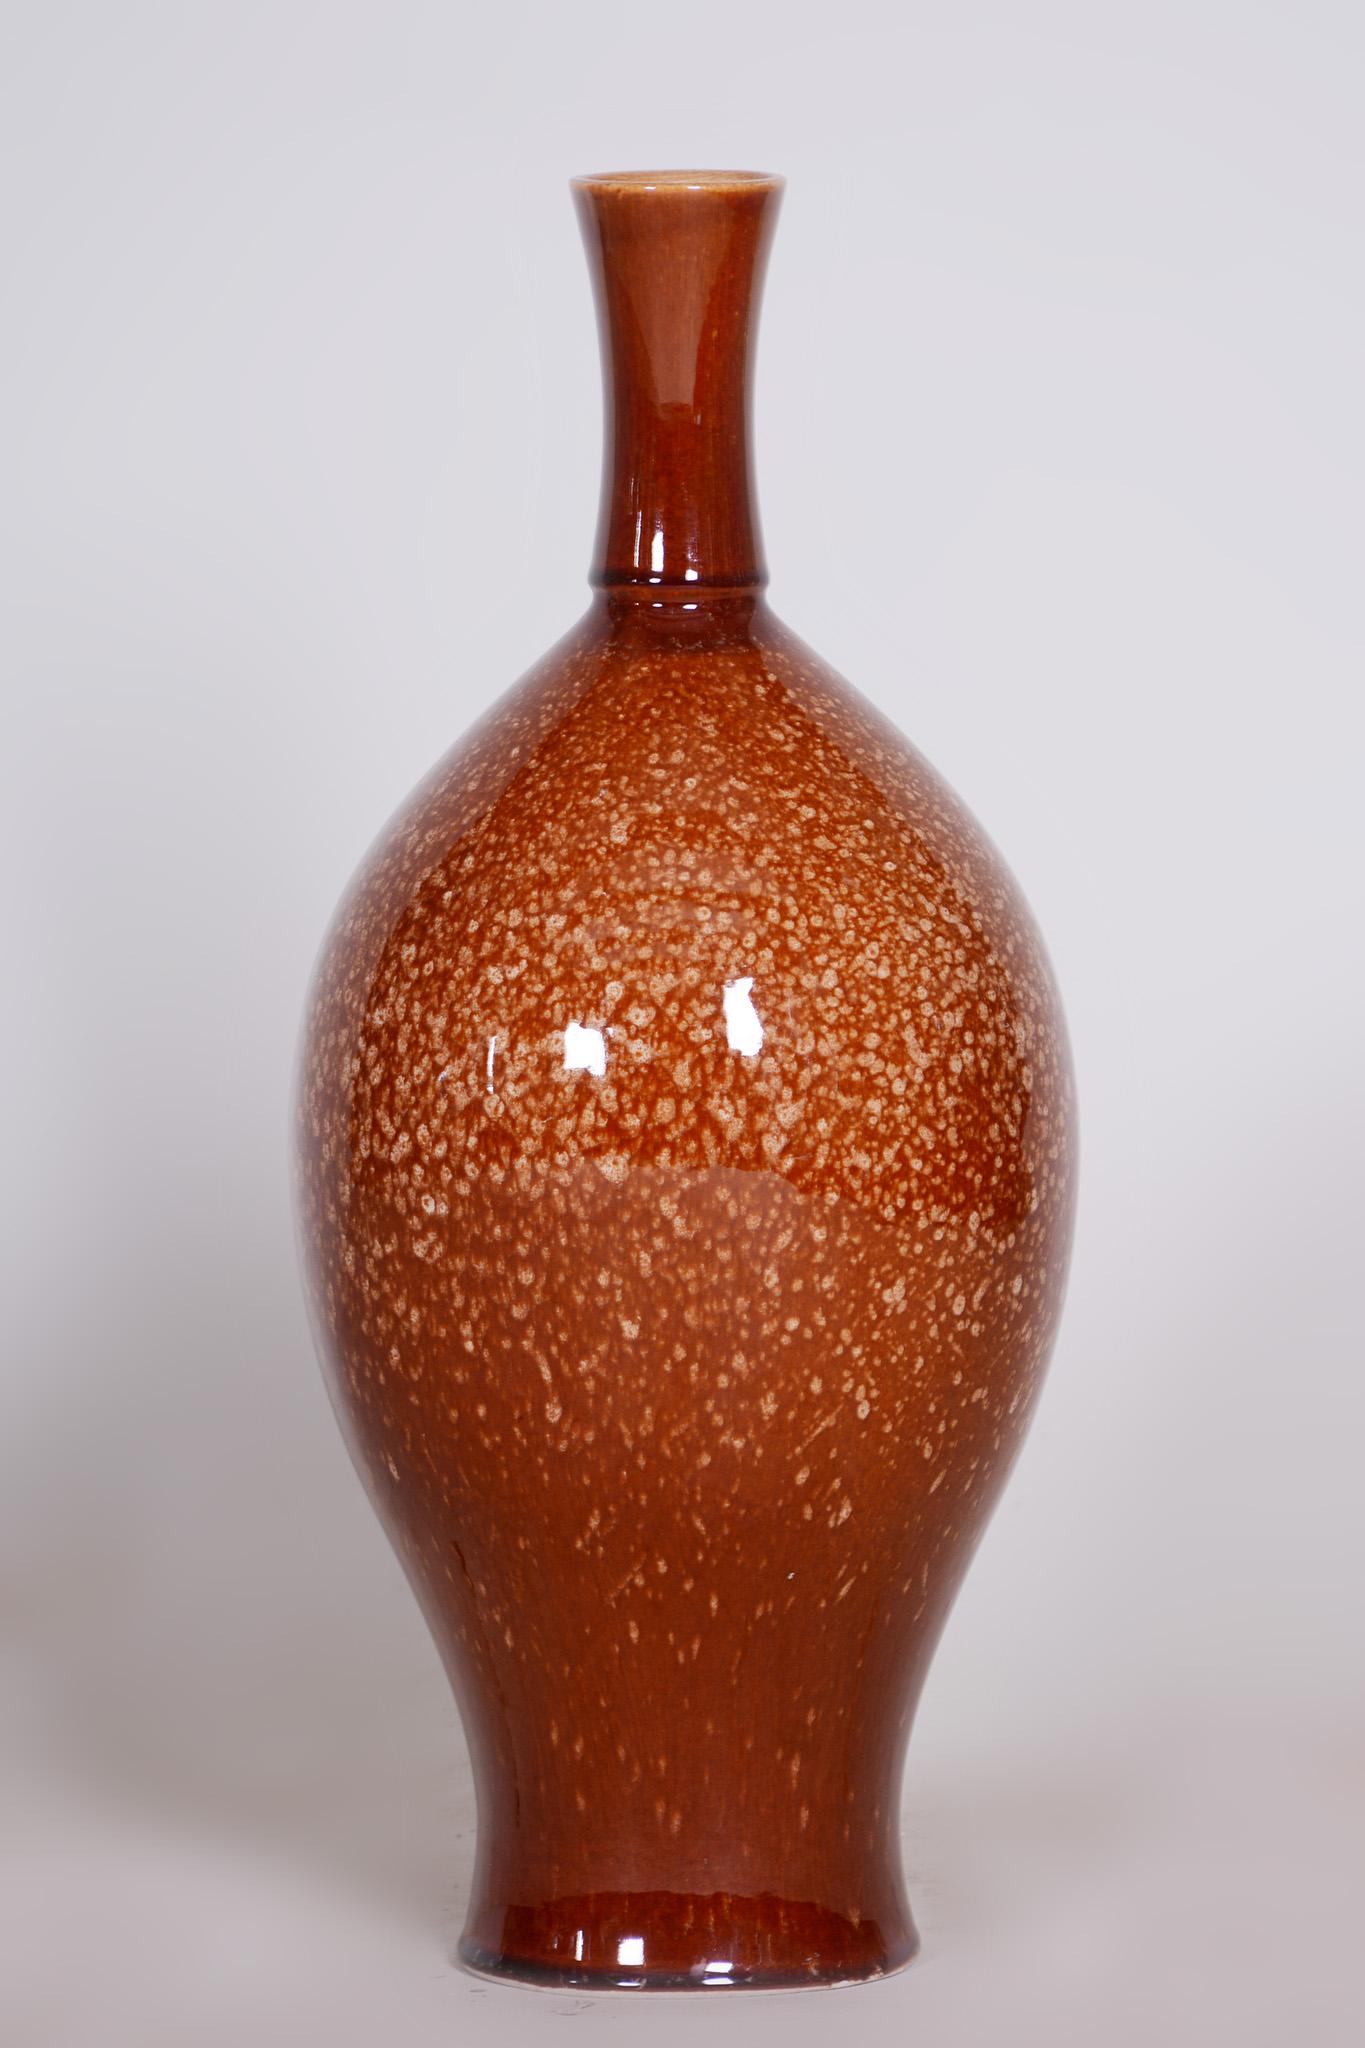 Original Bauhaus Vase, Glazed Ceramics, Well-Preserved Condition.

Period: 1950-1959
Source: Czechia
Material: Glazed ceramics

Perfectly preserved, undamaged vase.